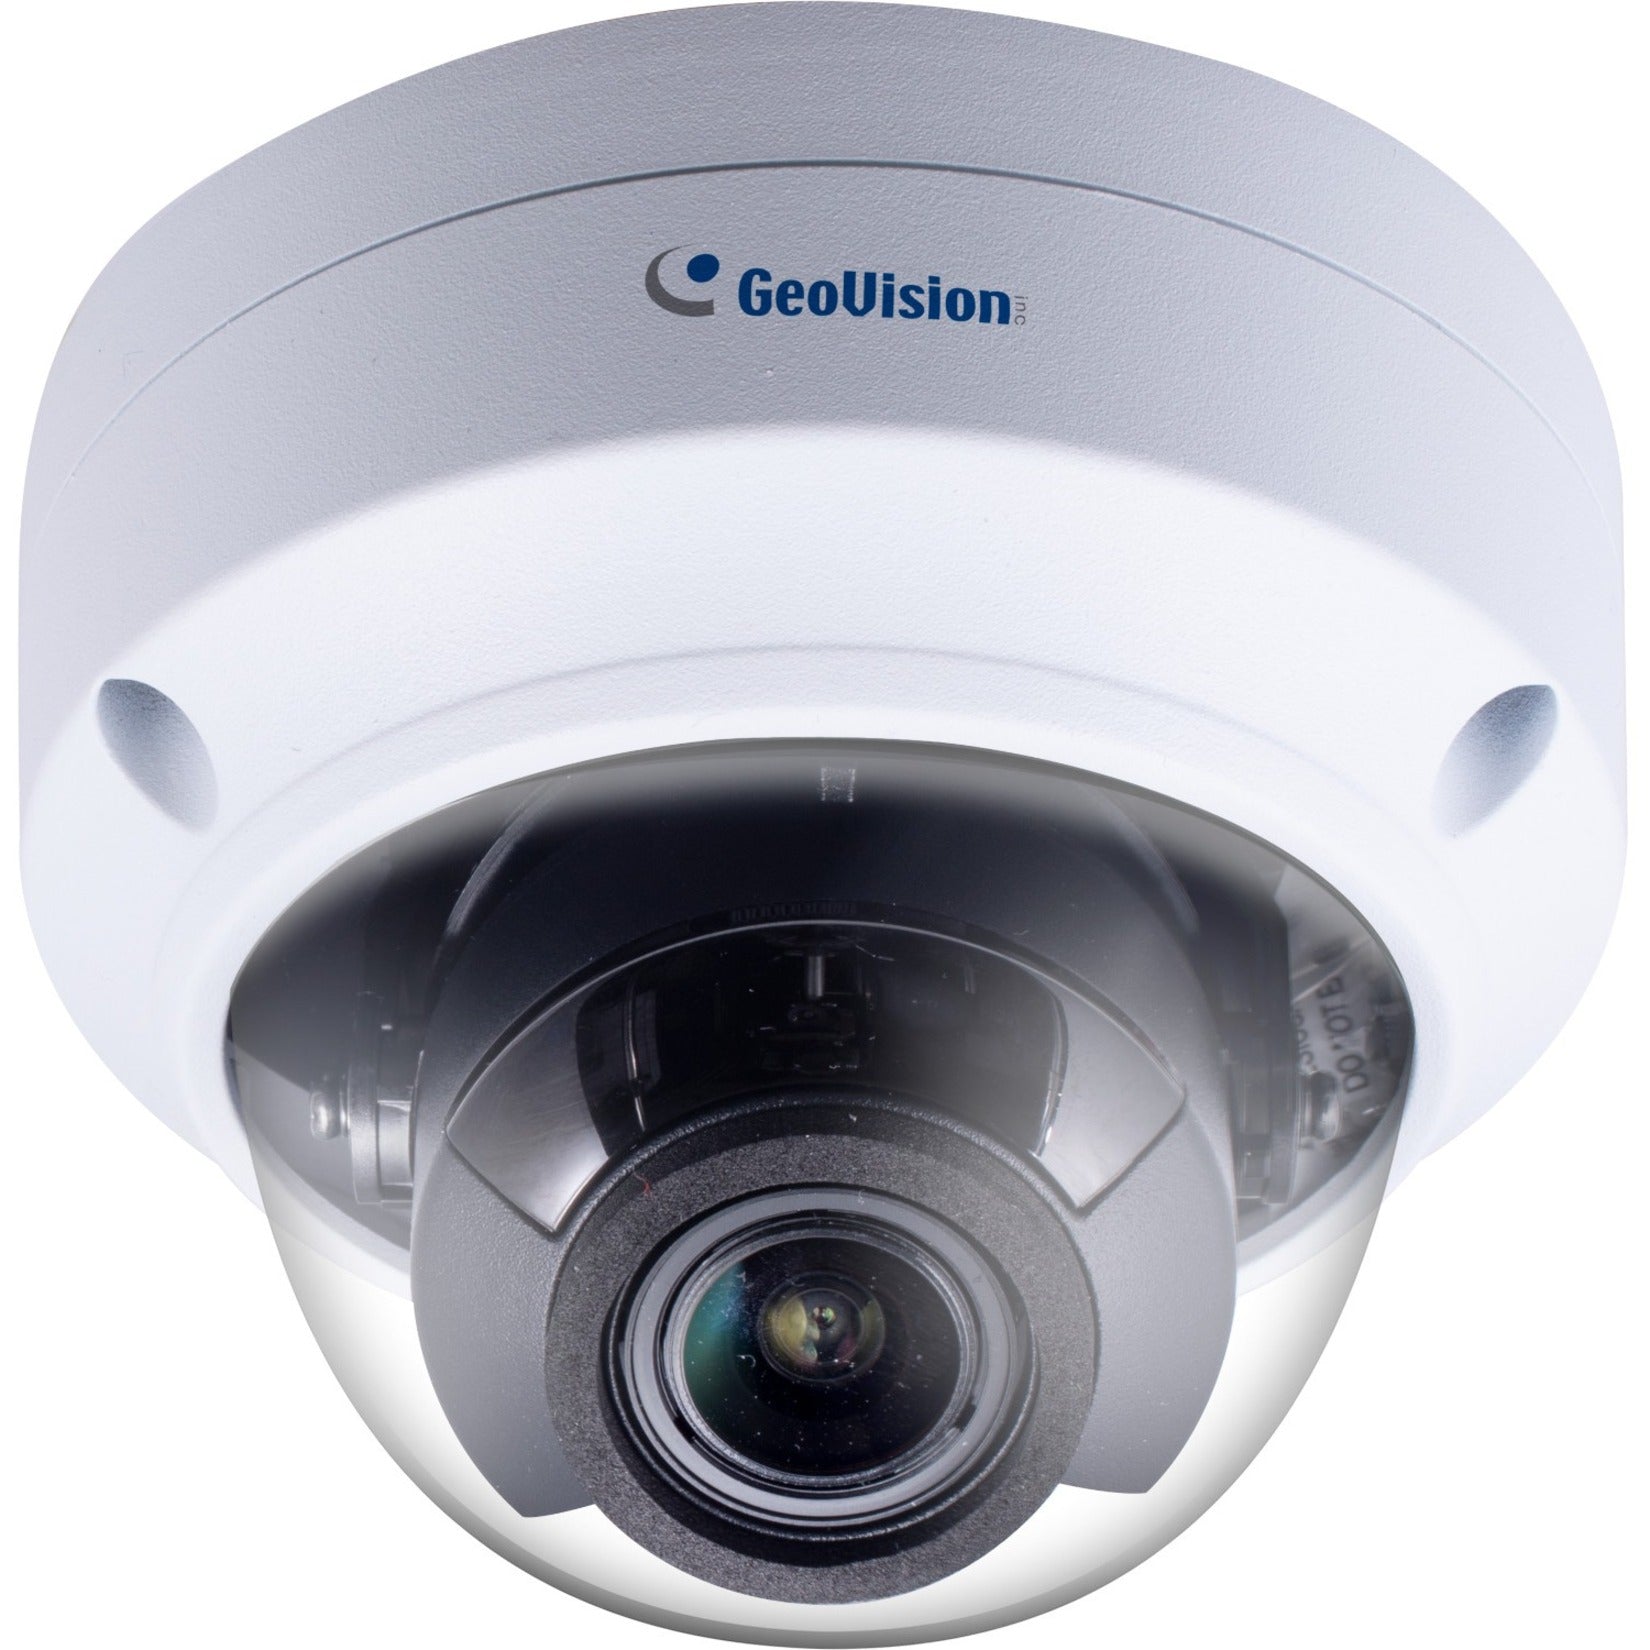 GeoVision GV-TVD4711 4MP HD Network Camera - Dome, Varifocal Lens, 4.3x Optical Zoom, H.265, IP66, IK10, Outdoor